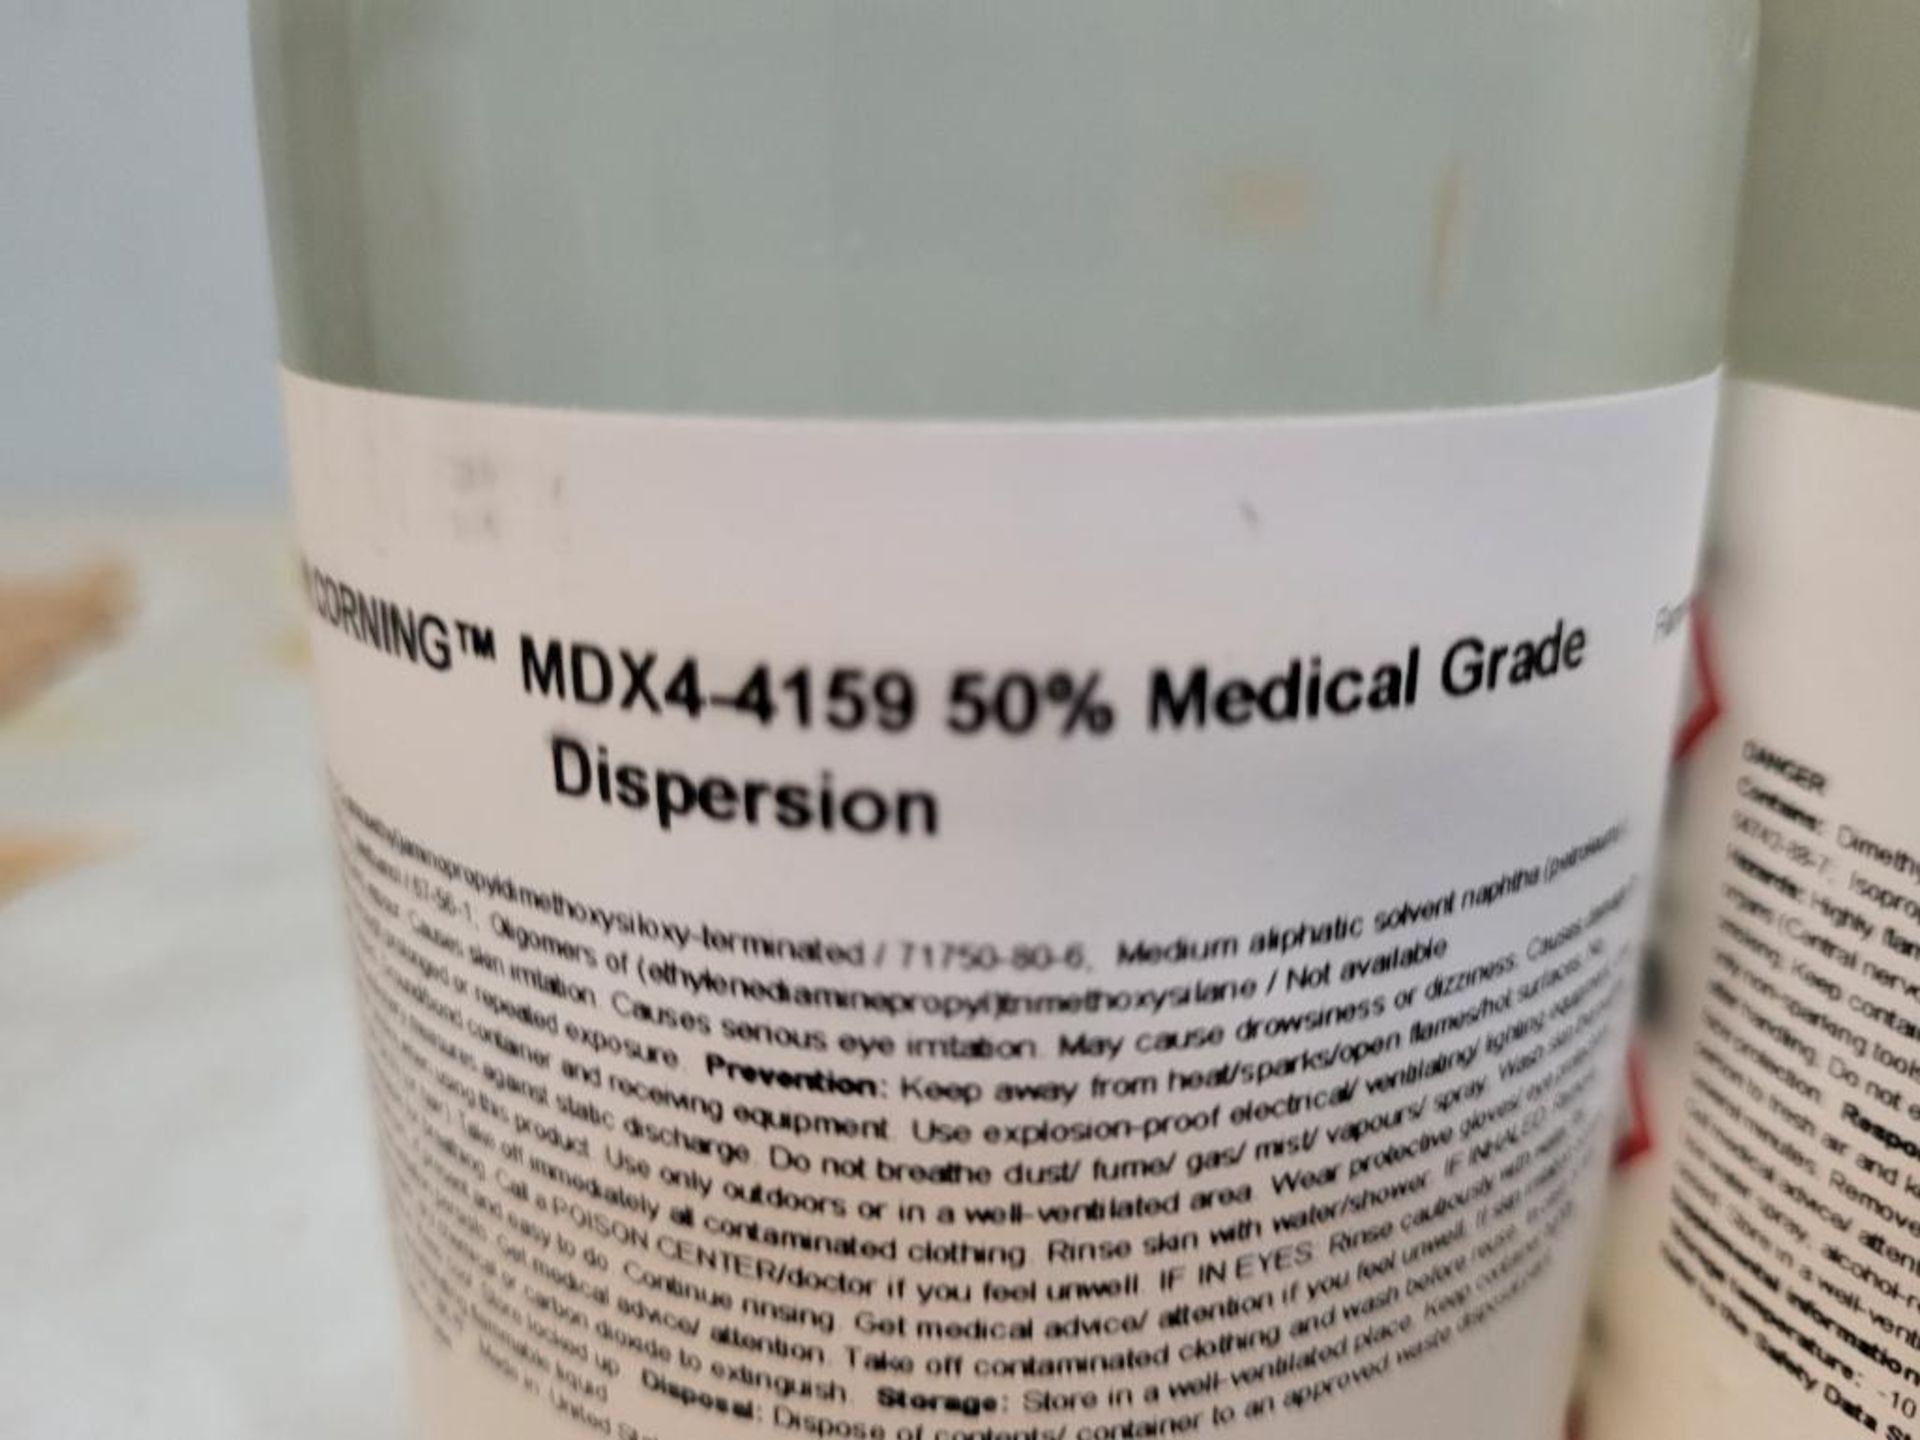 3 Sealed Bottles of Dow Corning MDX4-4159 50% Medical Grade Dispersion - Image 2 of 3